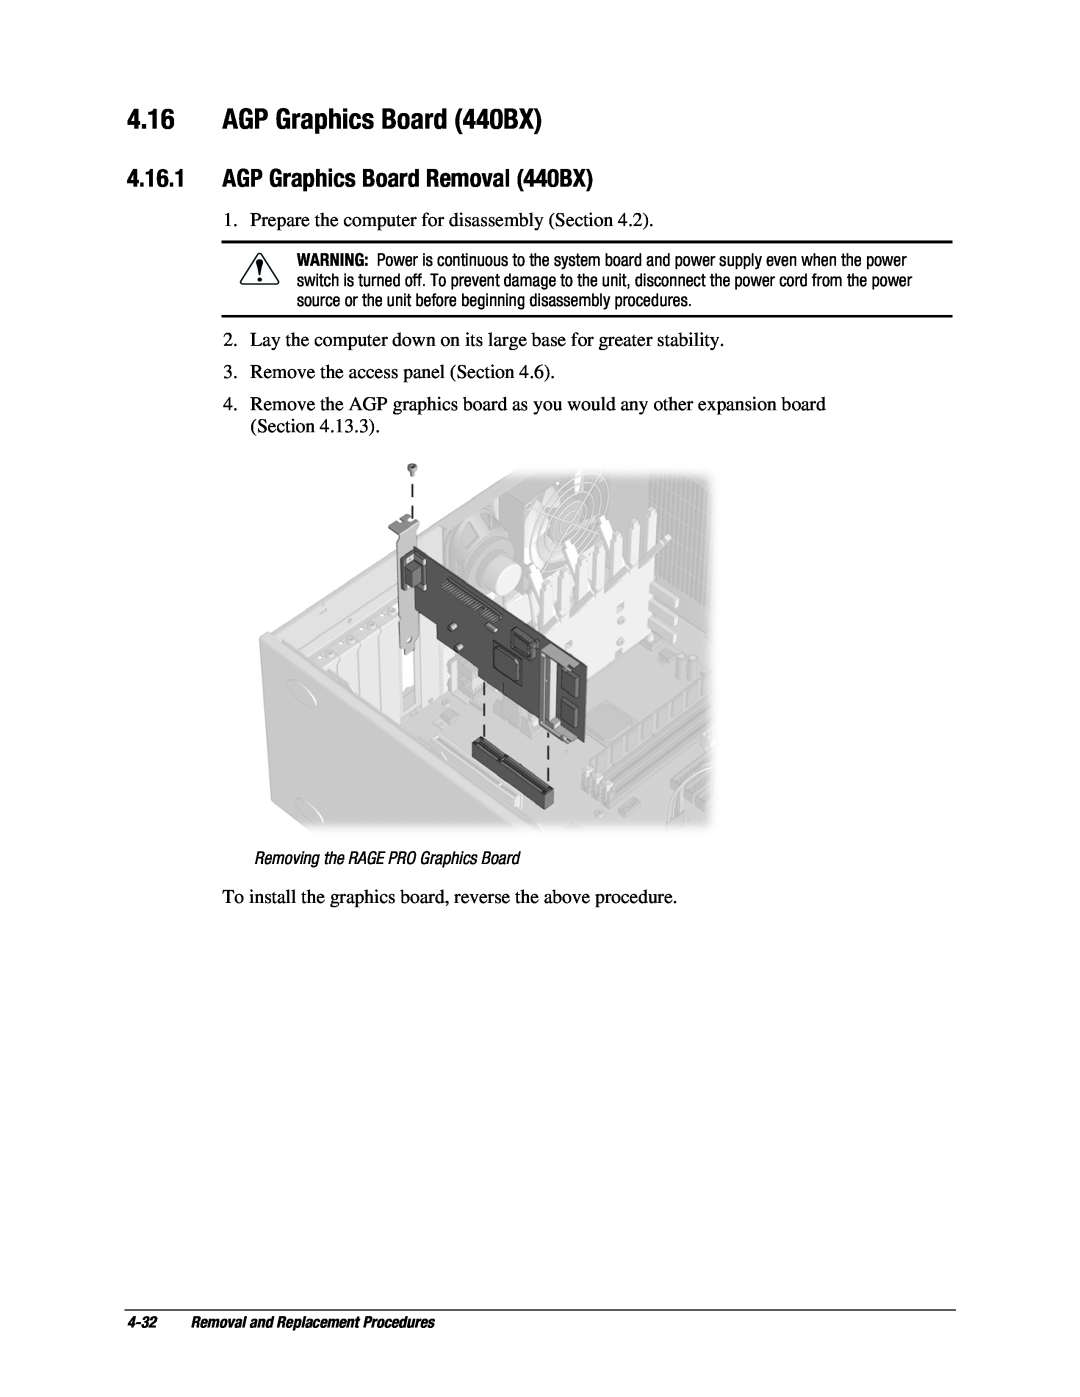 Compaq EP Series manual AGP Graphics Board 440BX, AGP Graphics Board Removal 440BX 